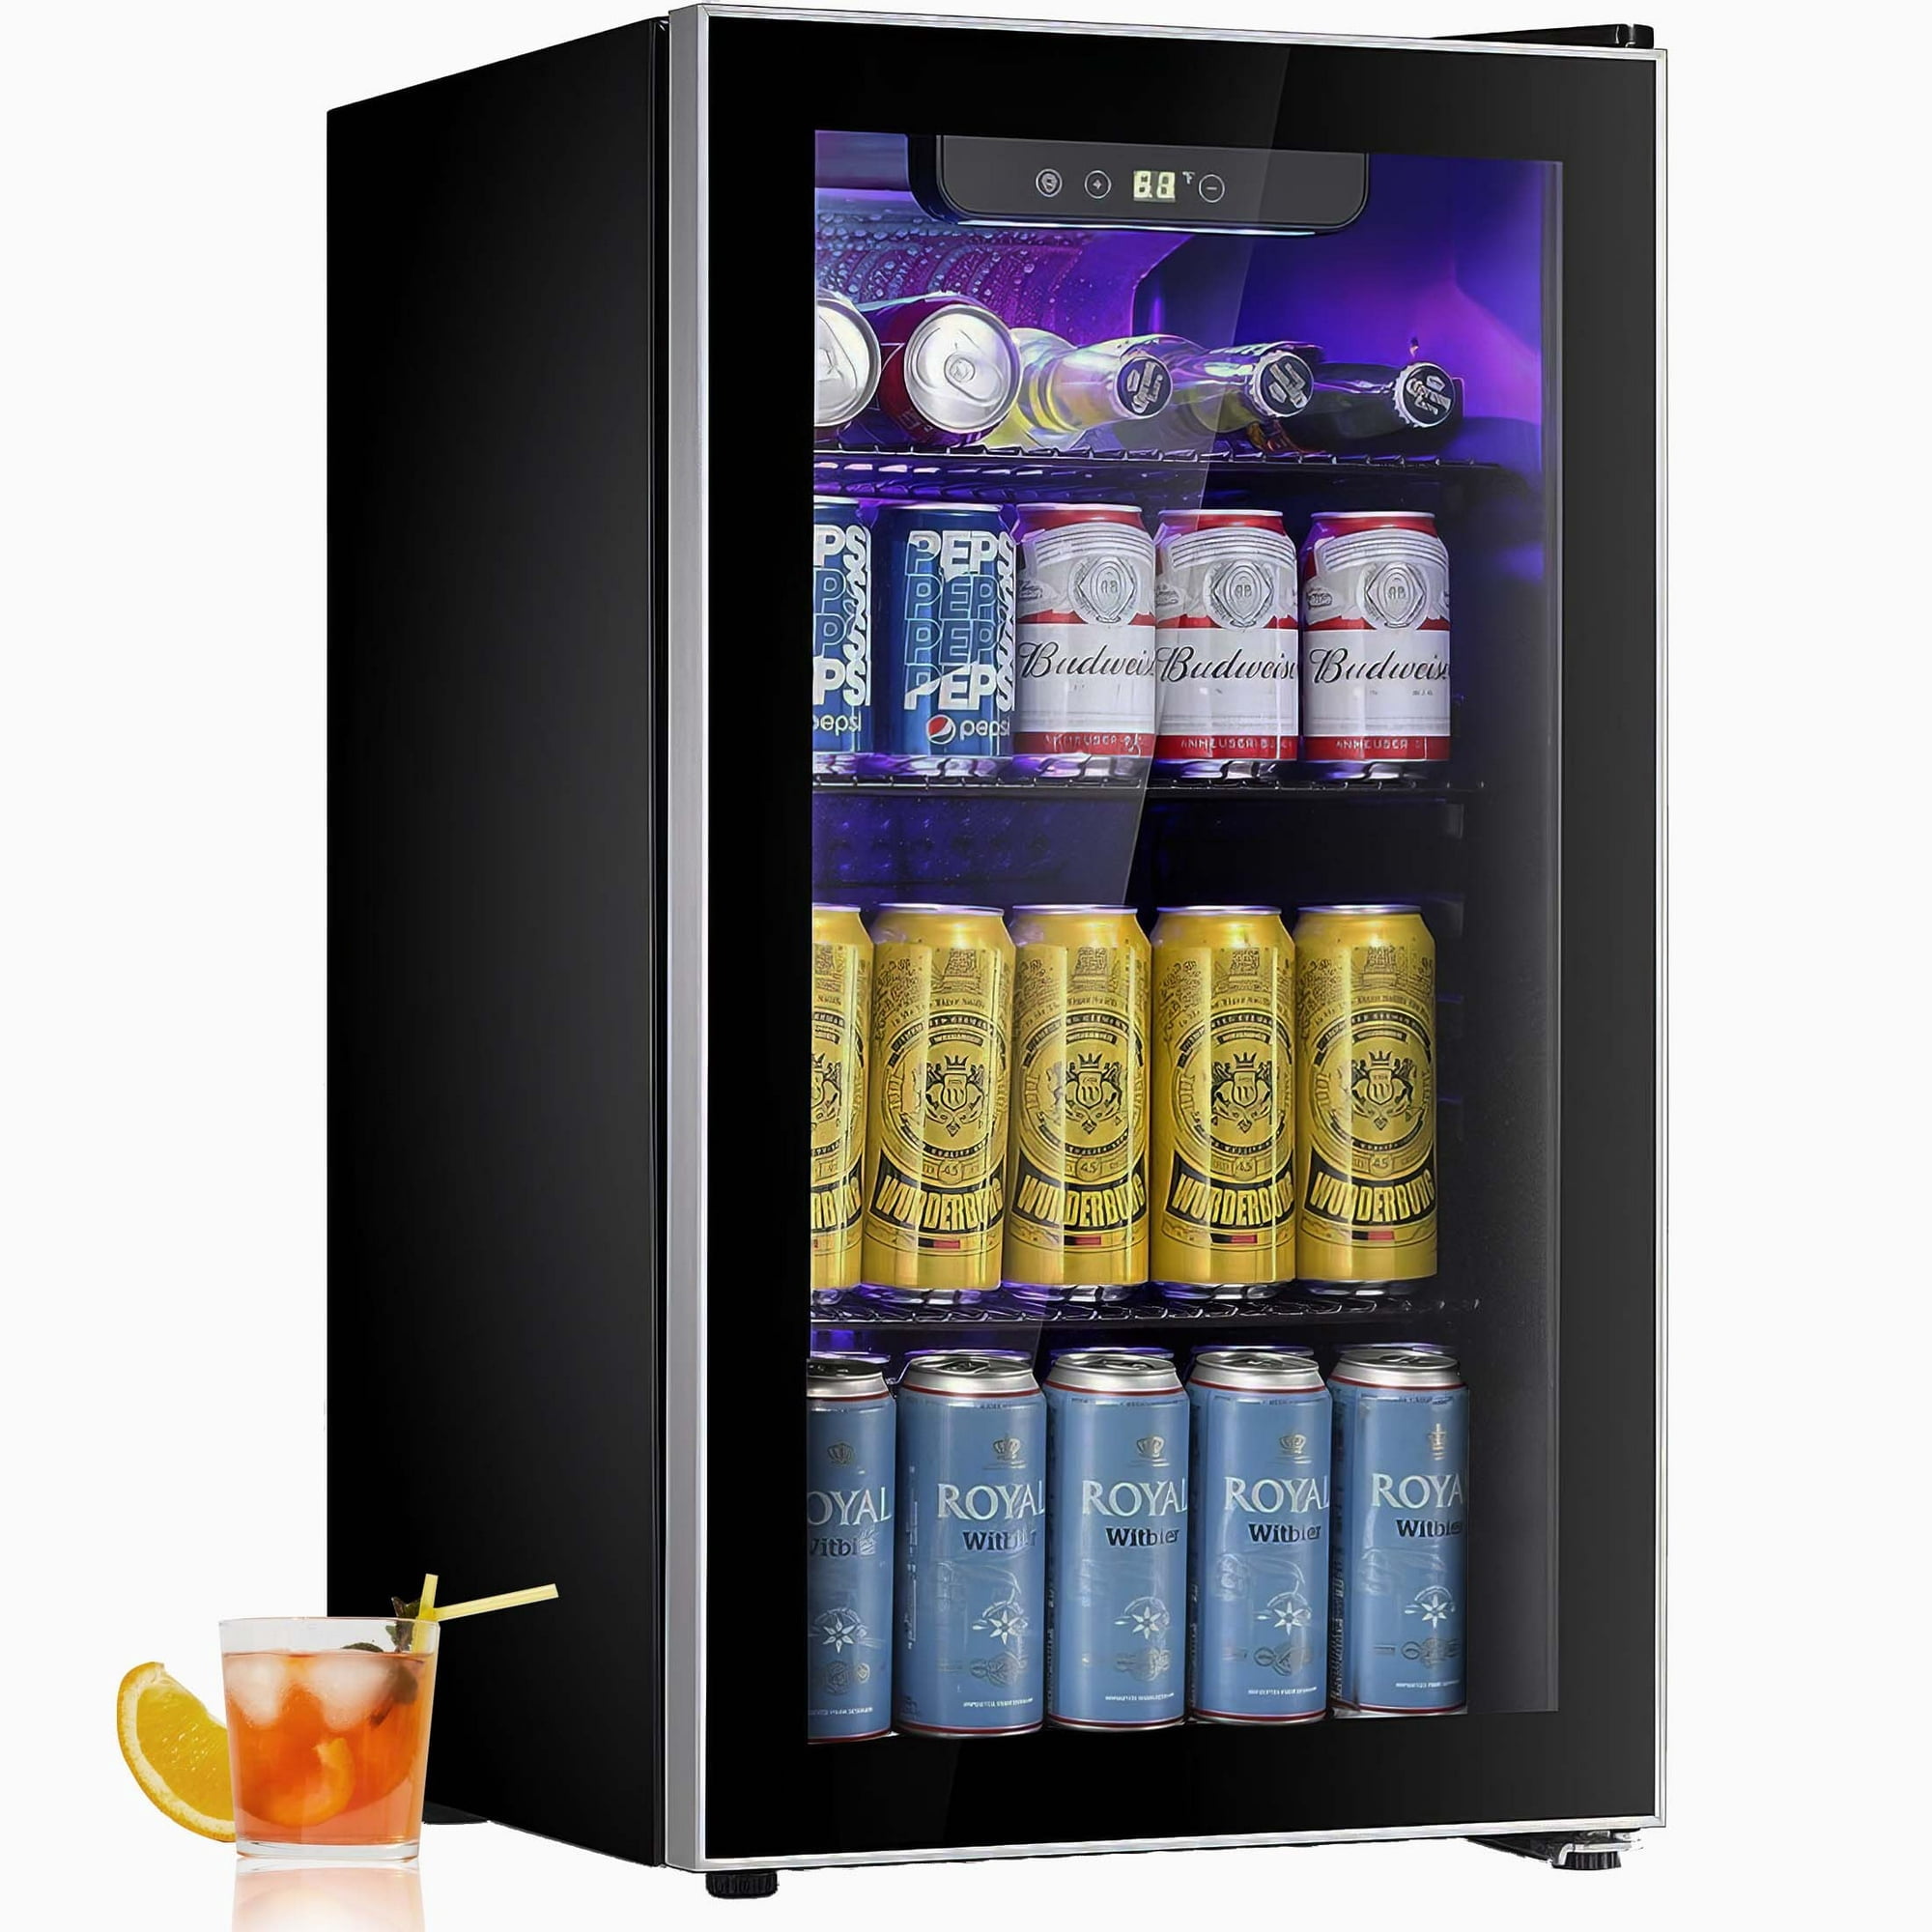 STAIGIS Mini Beverage Refrigerator Freestanding, Small Drink Fridge for Home & Office, Glass Door